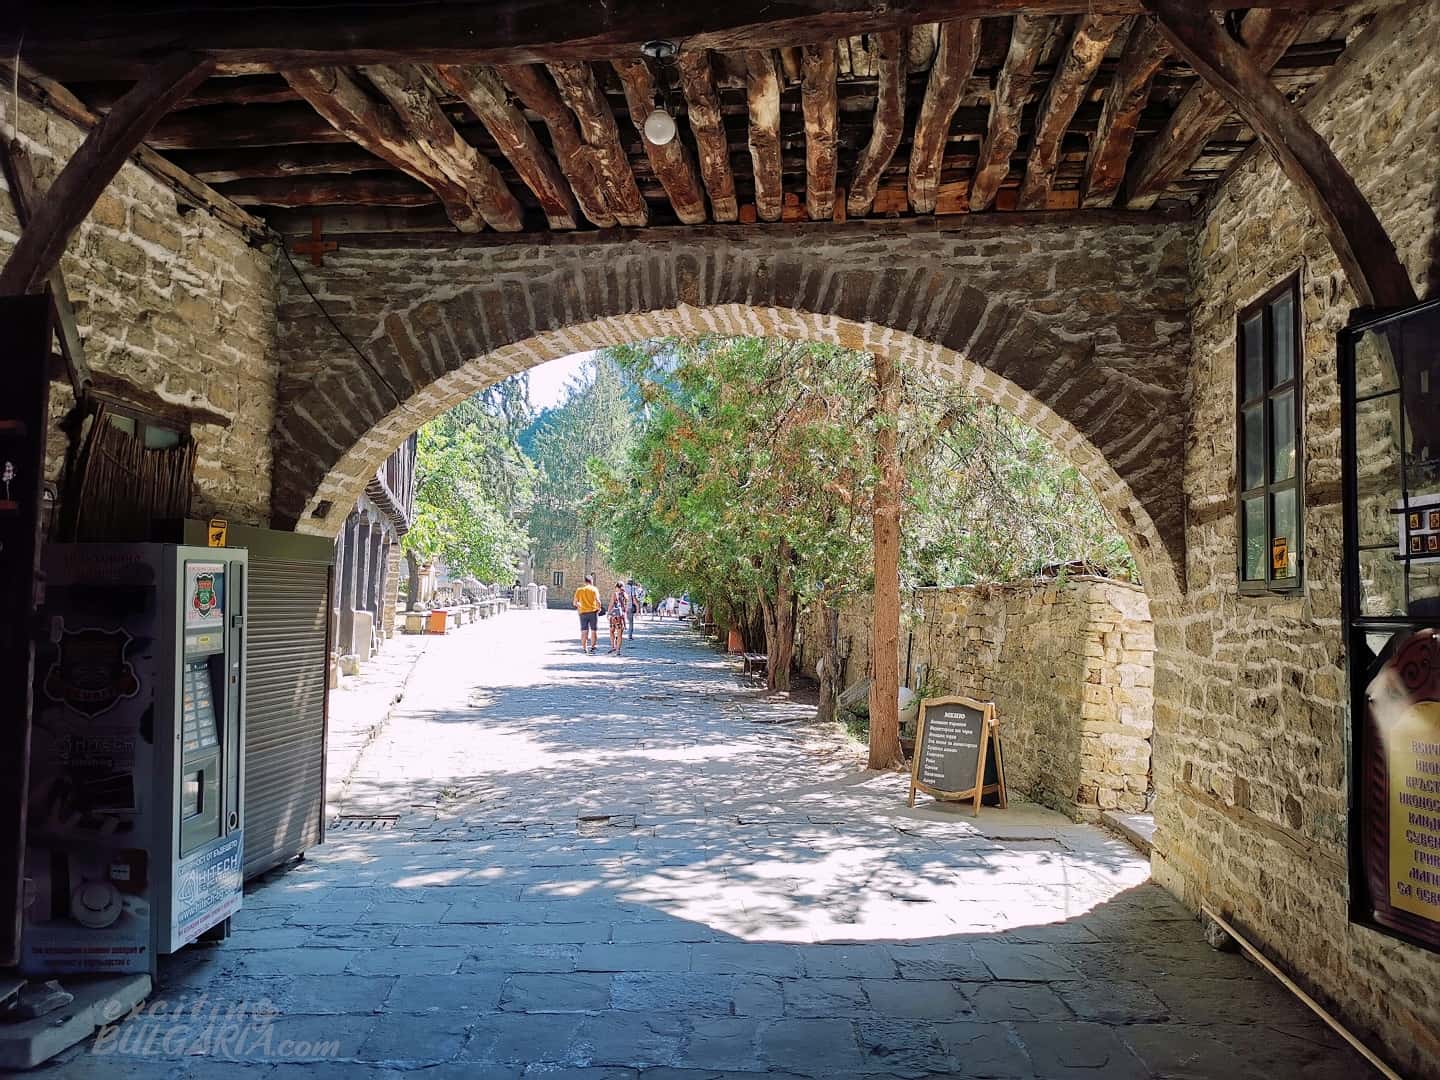 The view through the entrance gate of the Dryanovo Monastery